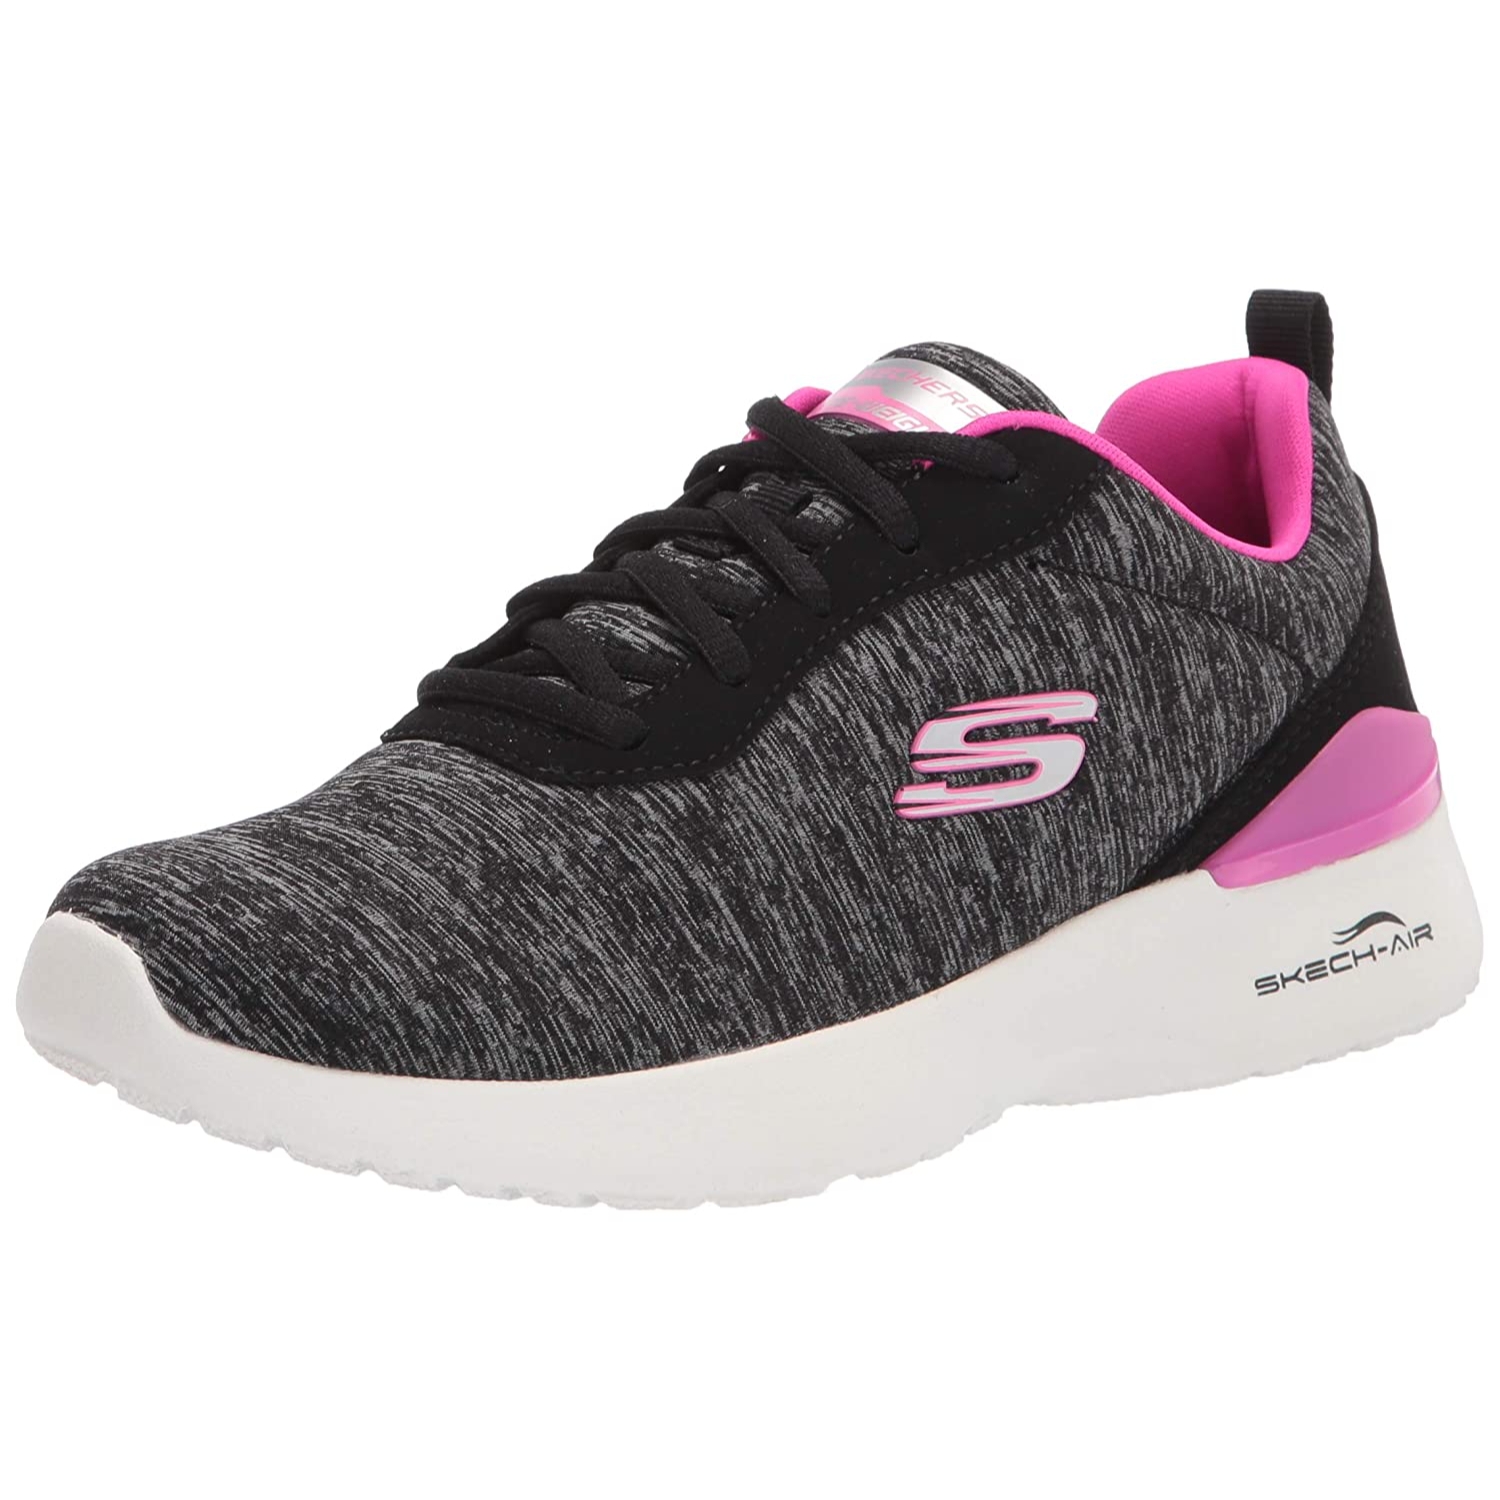 Skechers Women's Skech-AIR Dynamight-Paradise Black/HOT Sports Shoe_149344-BKHP